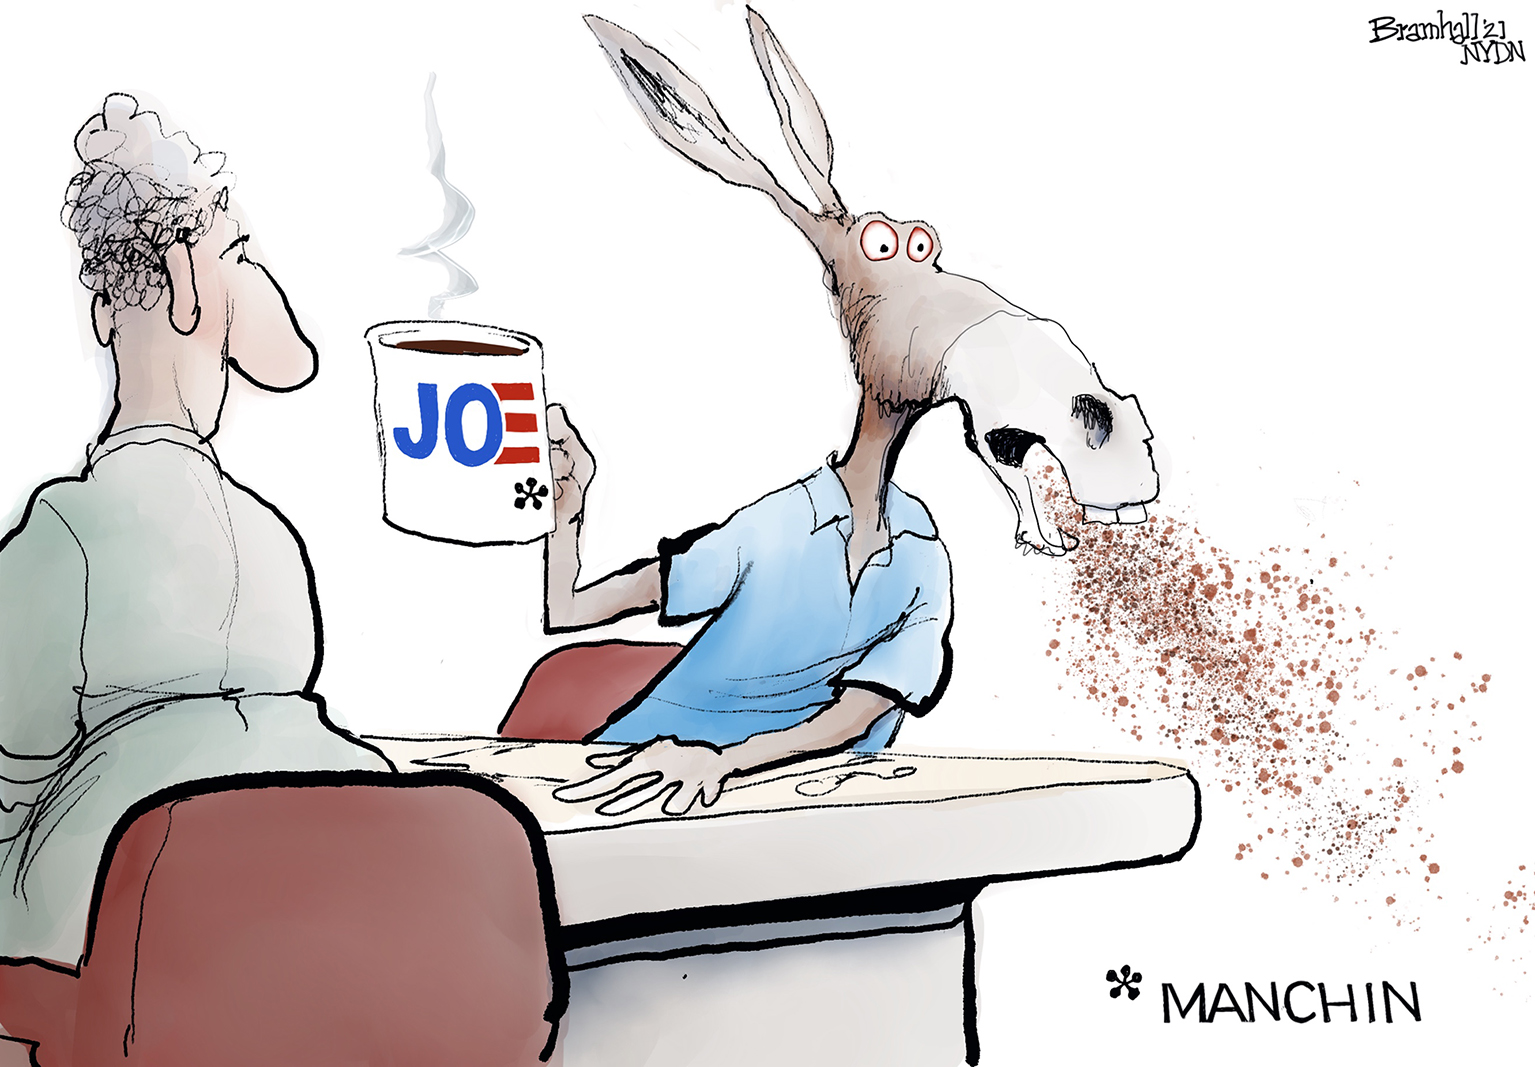 A rough cup of Joe